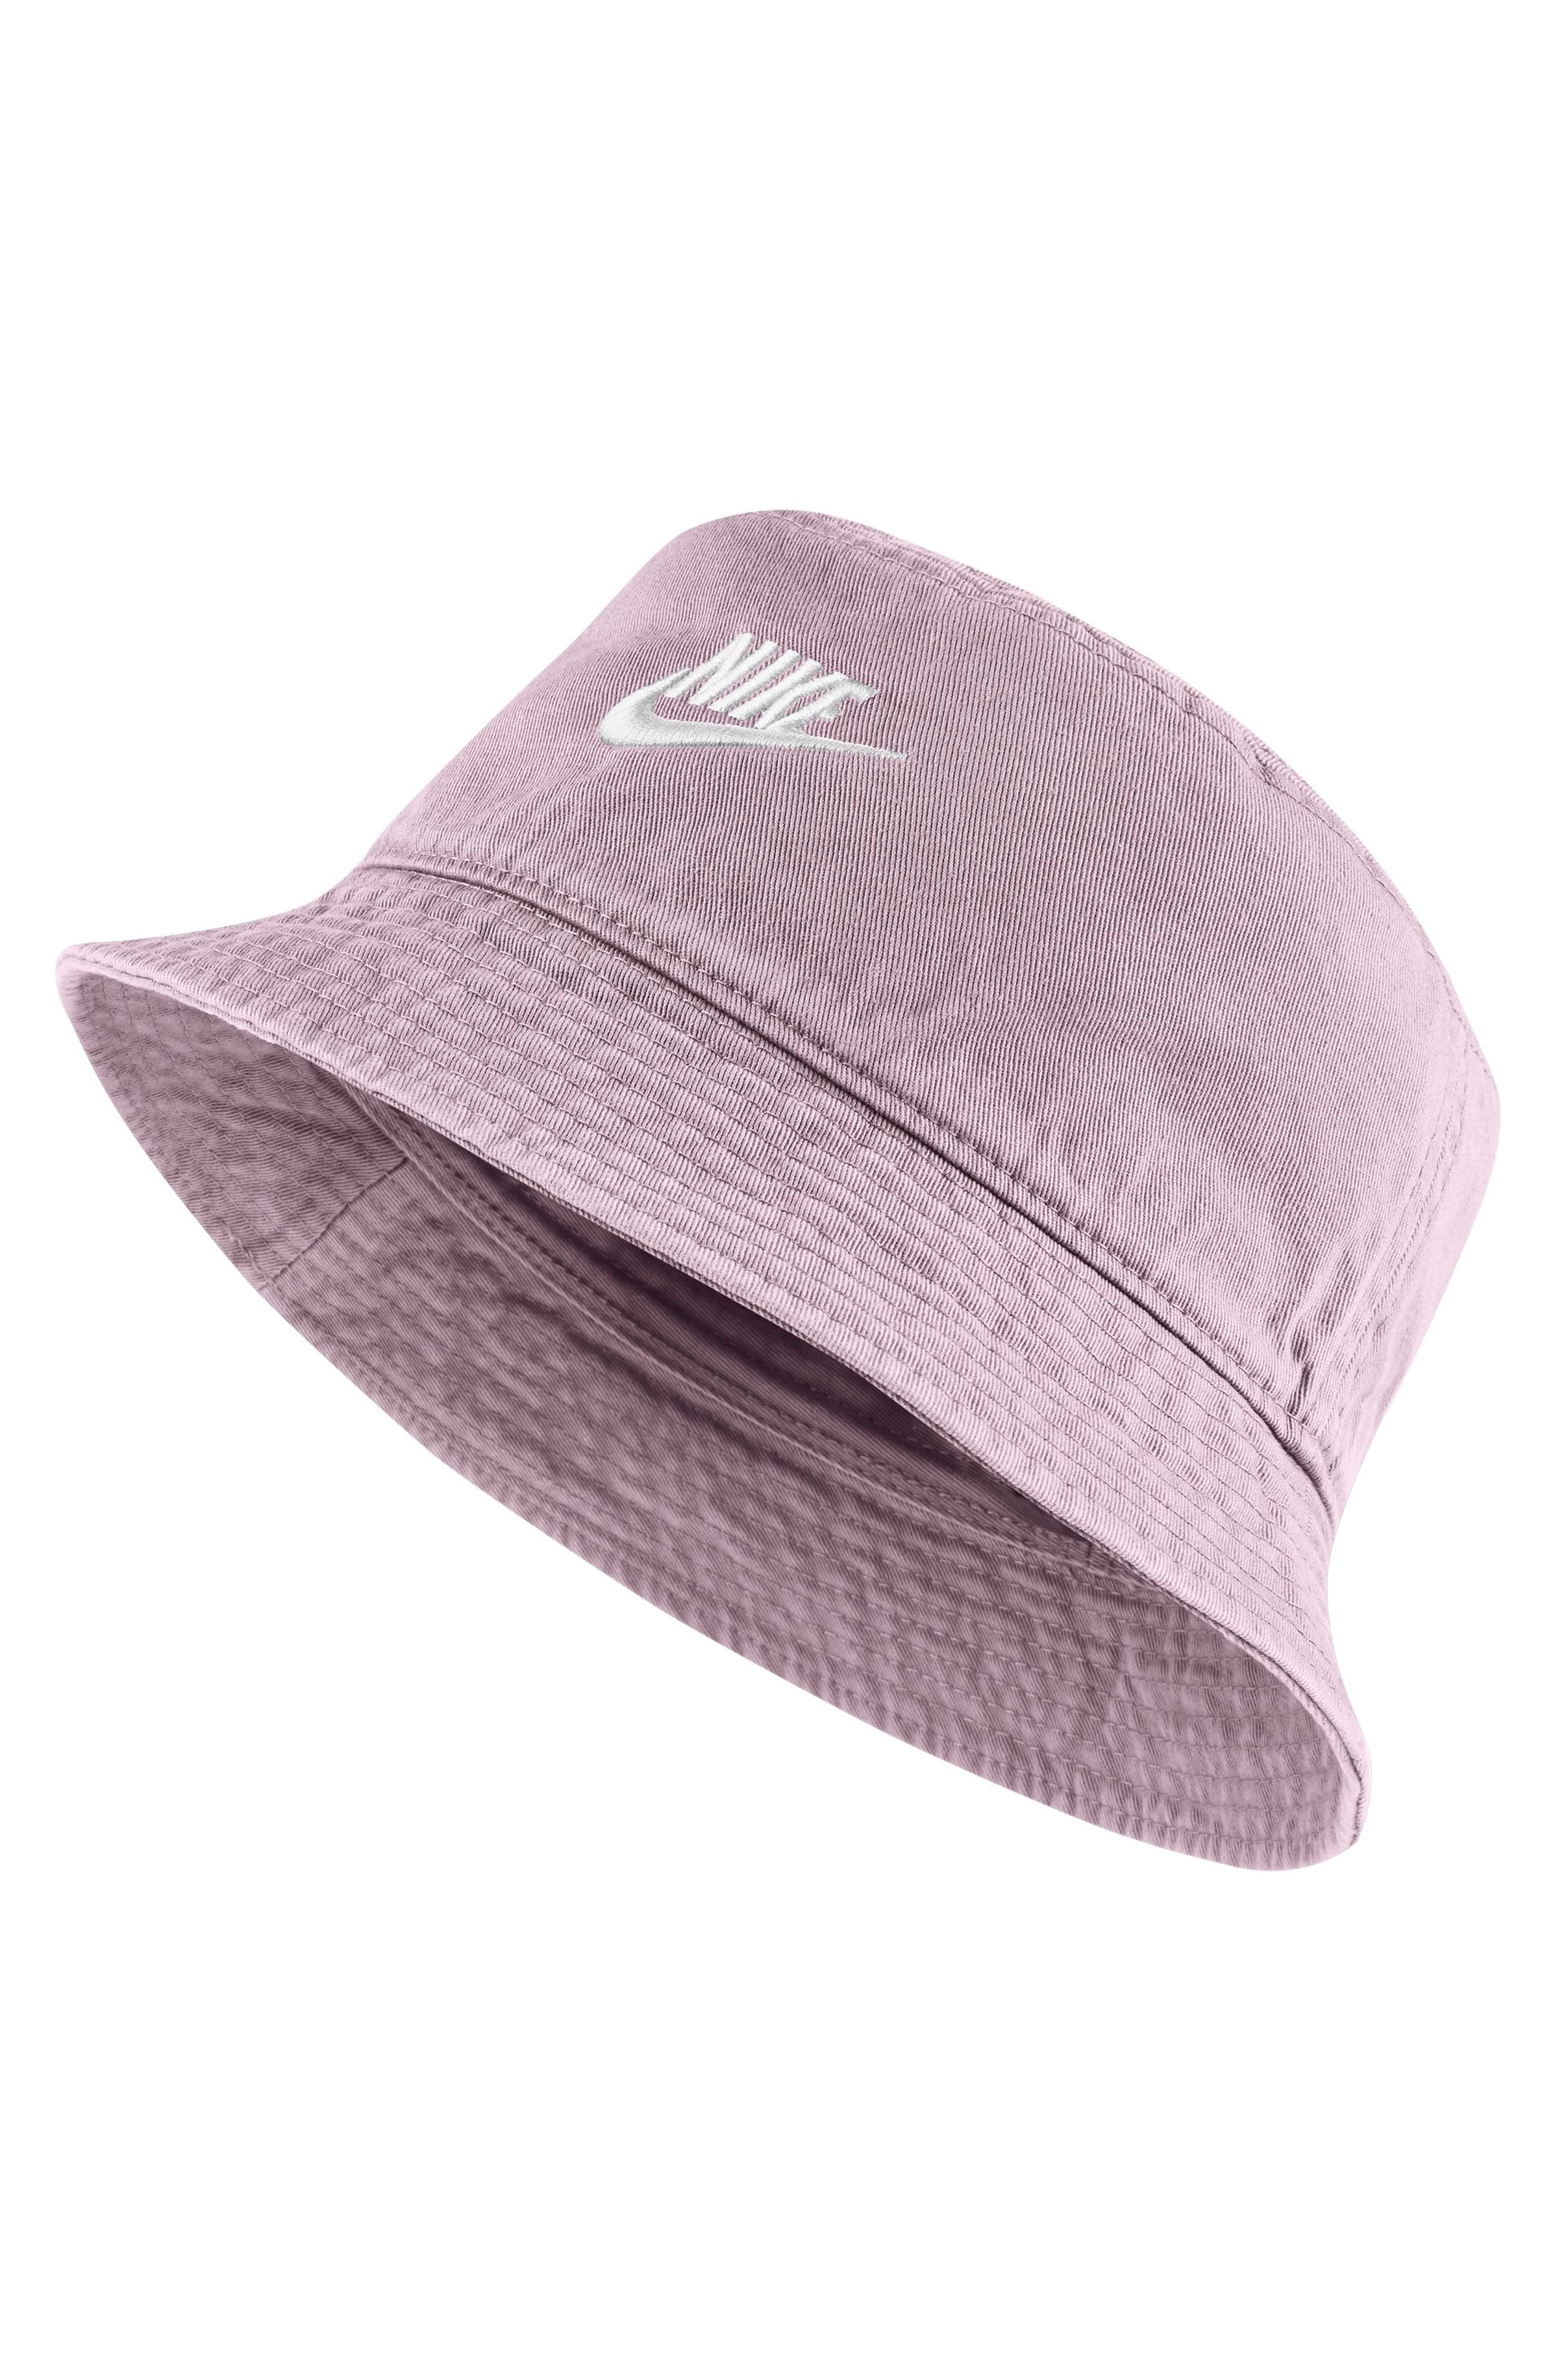 Bucket Hat Beach Sun Hat Foldable Cotton Fisherman Outdoor Cap Lovely Bomber Hats for Women Men Boy Girl